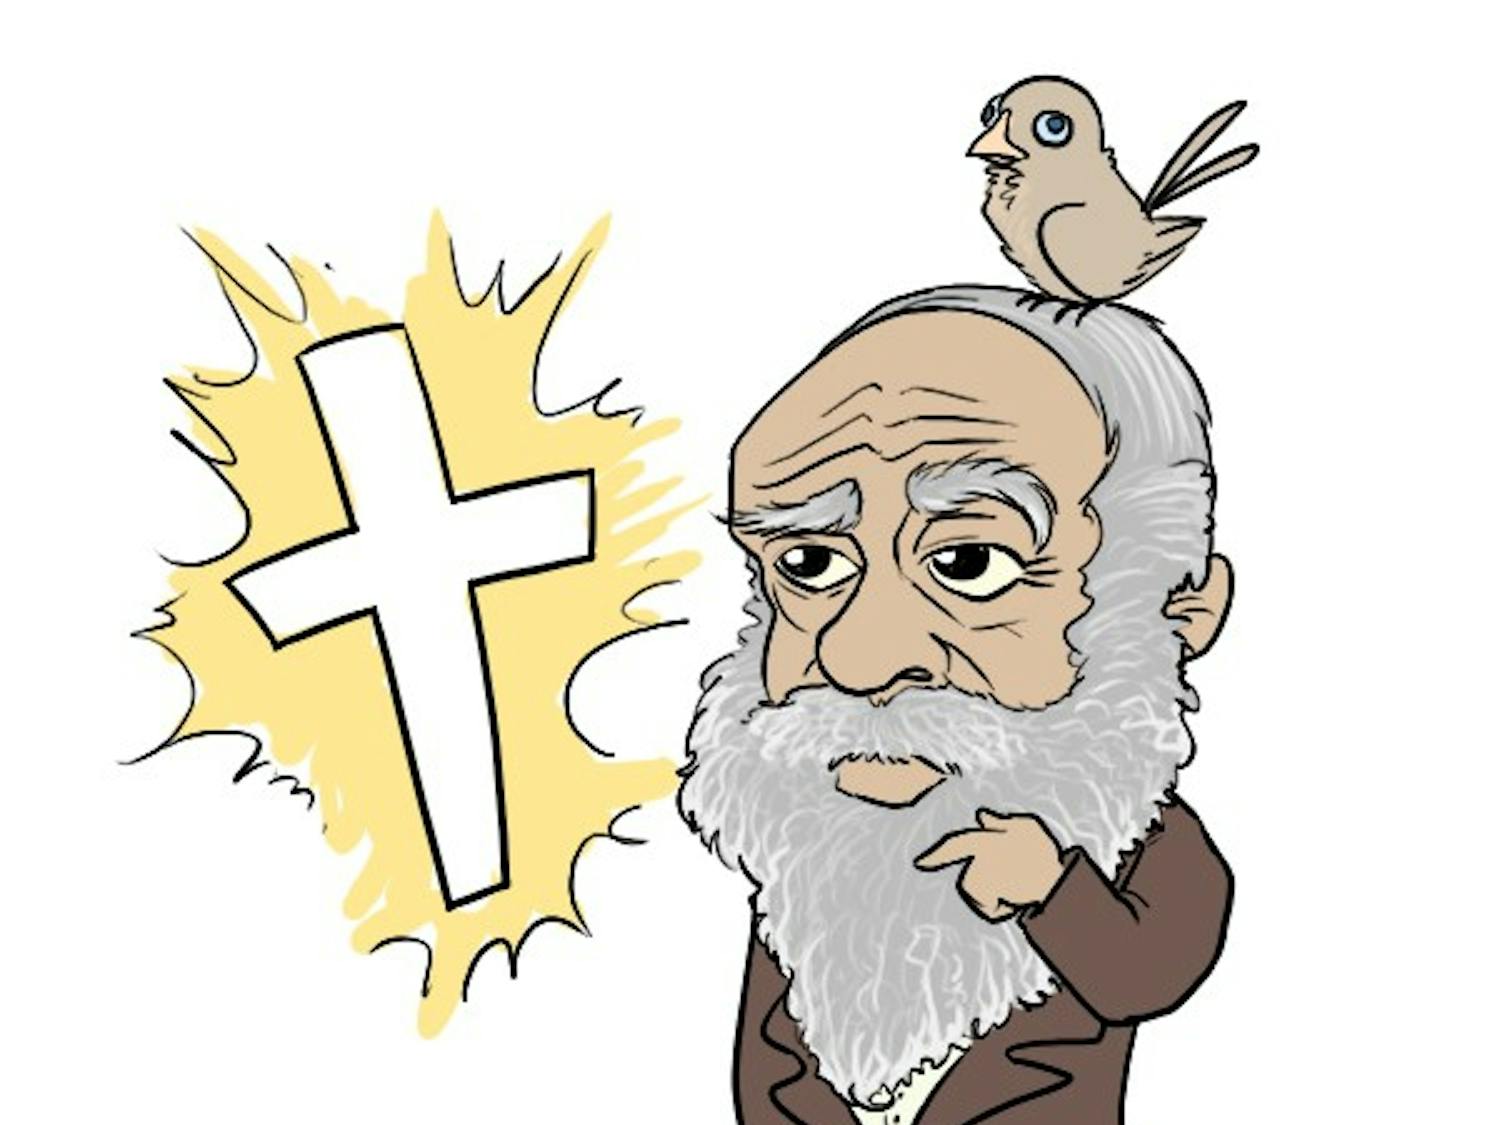 Darwin's legacy independent of beliefs